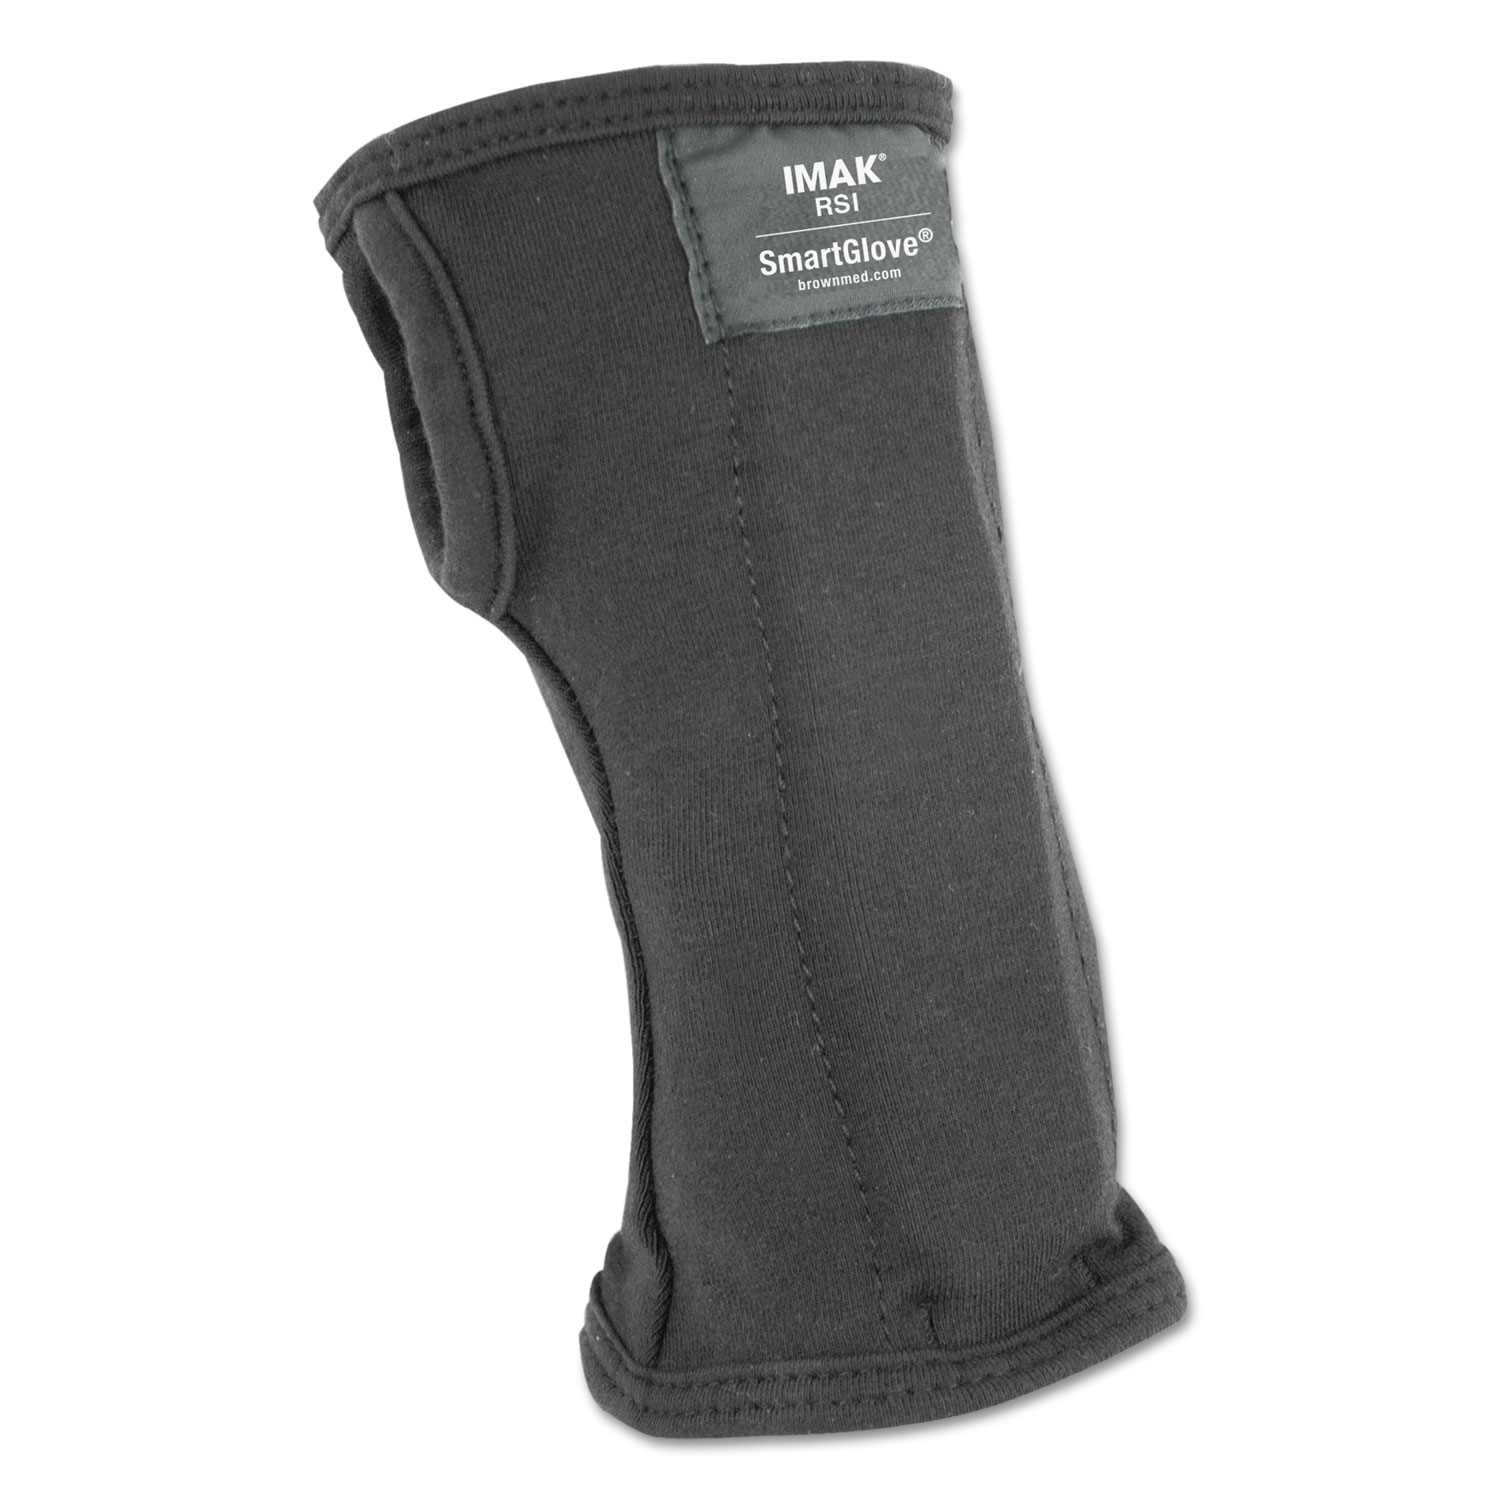  IMAK RSI A20126 SmartGlove Wrist Wrap, Medium, Black (IMAA20126) 